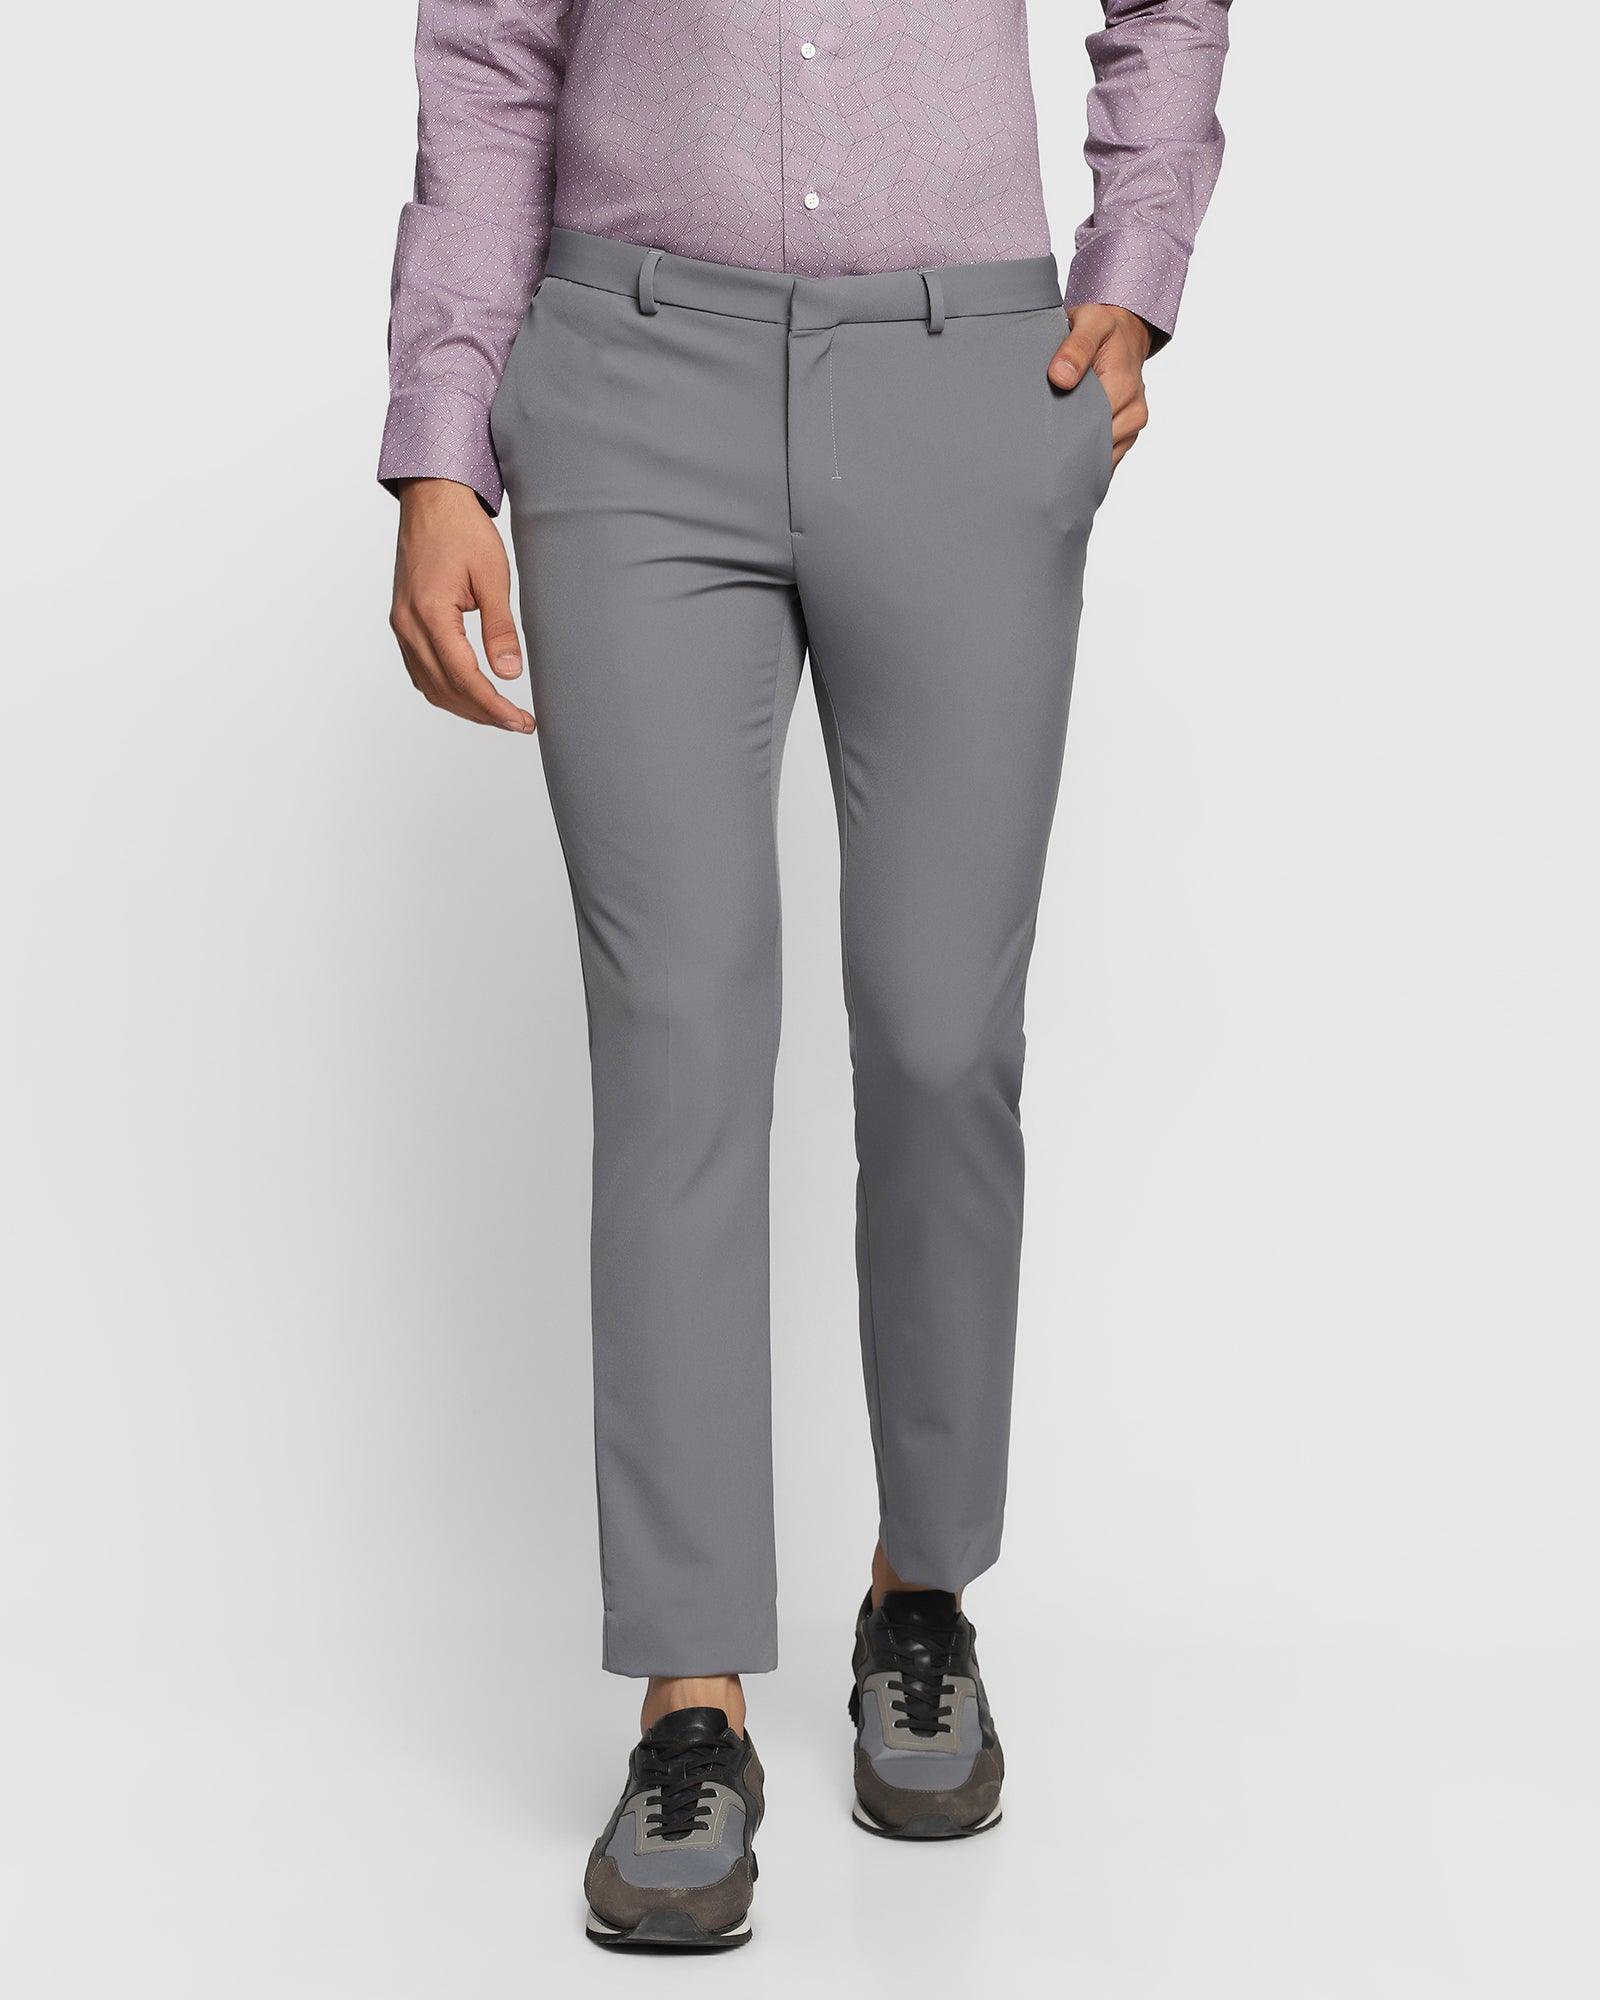 TechPro Slim Fit B-91 Formal Grey Solid Trouser - Filsey